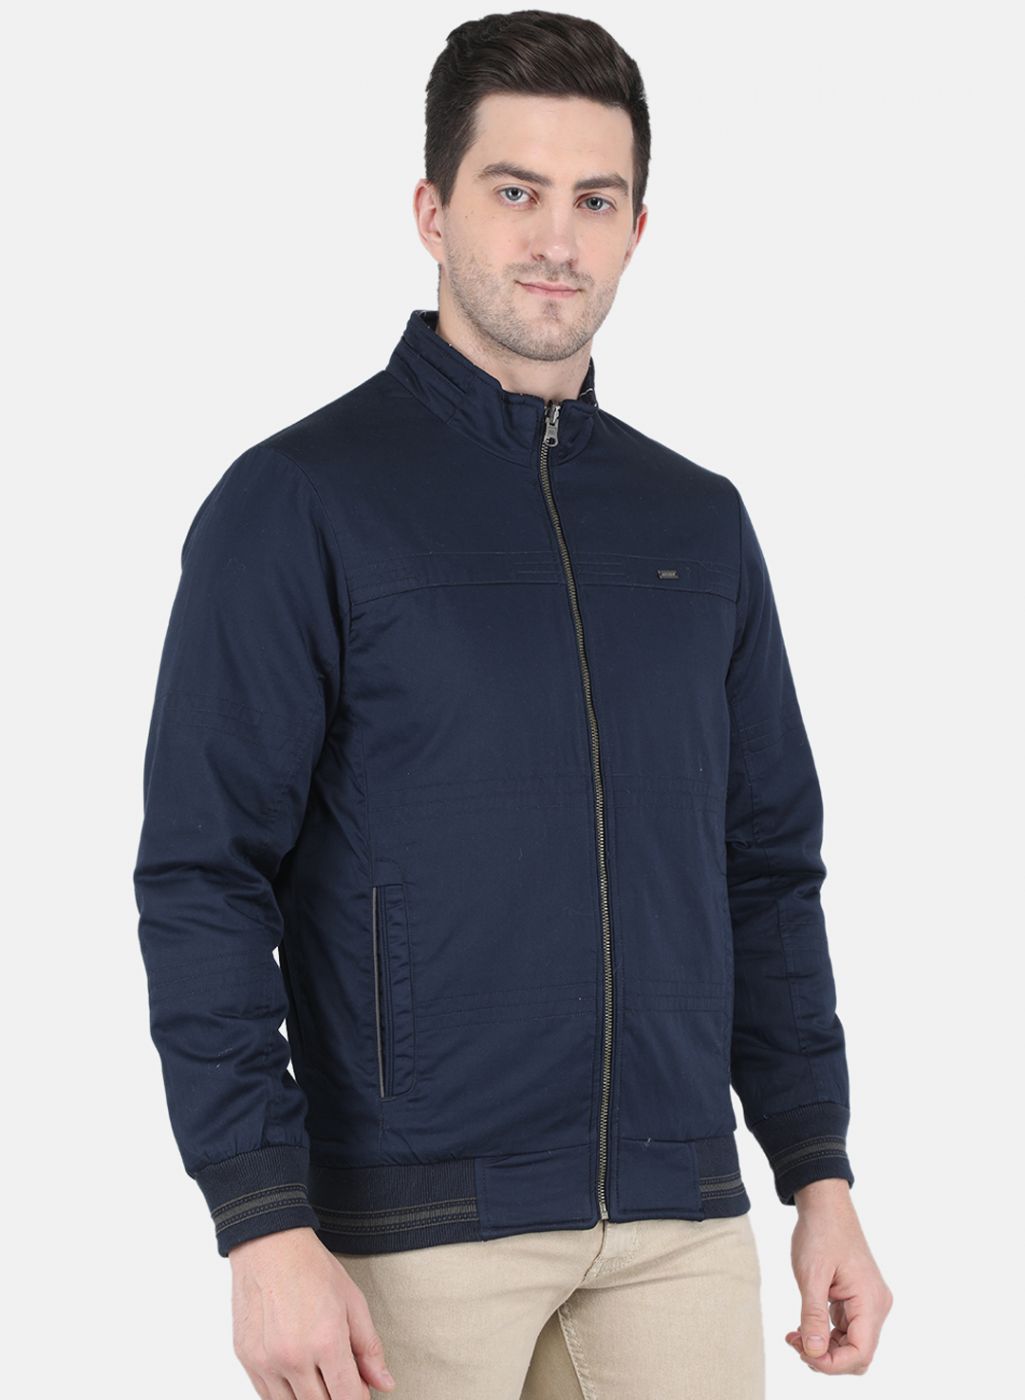 Buy Navy Blue Jackets & Coats for Men by Killer Online | Ajio.com